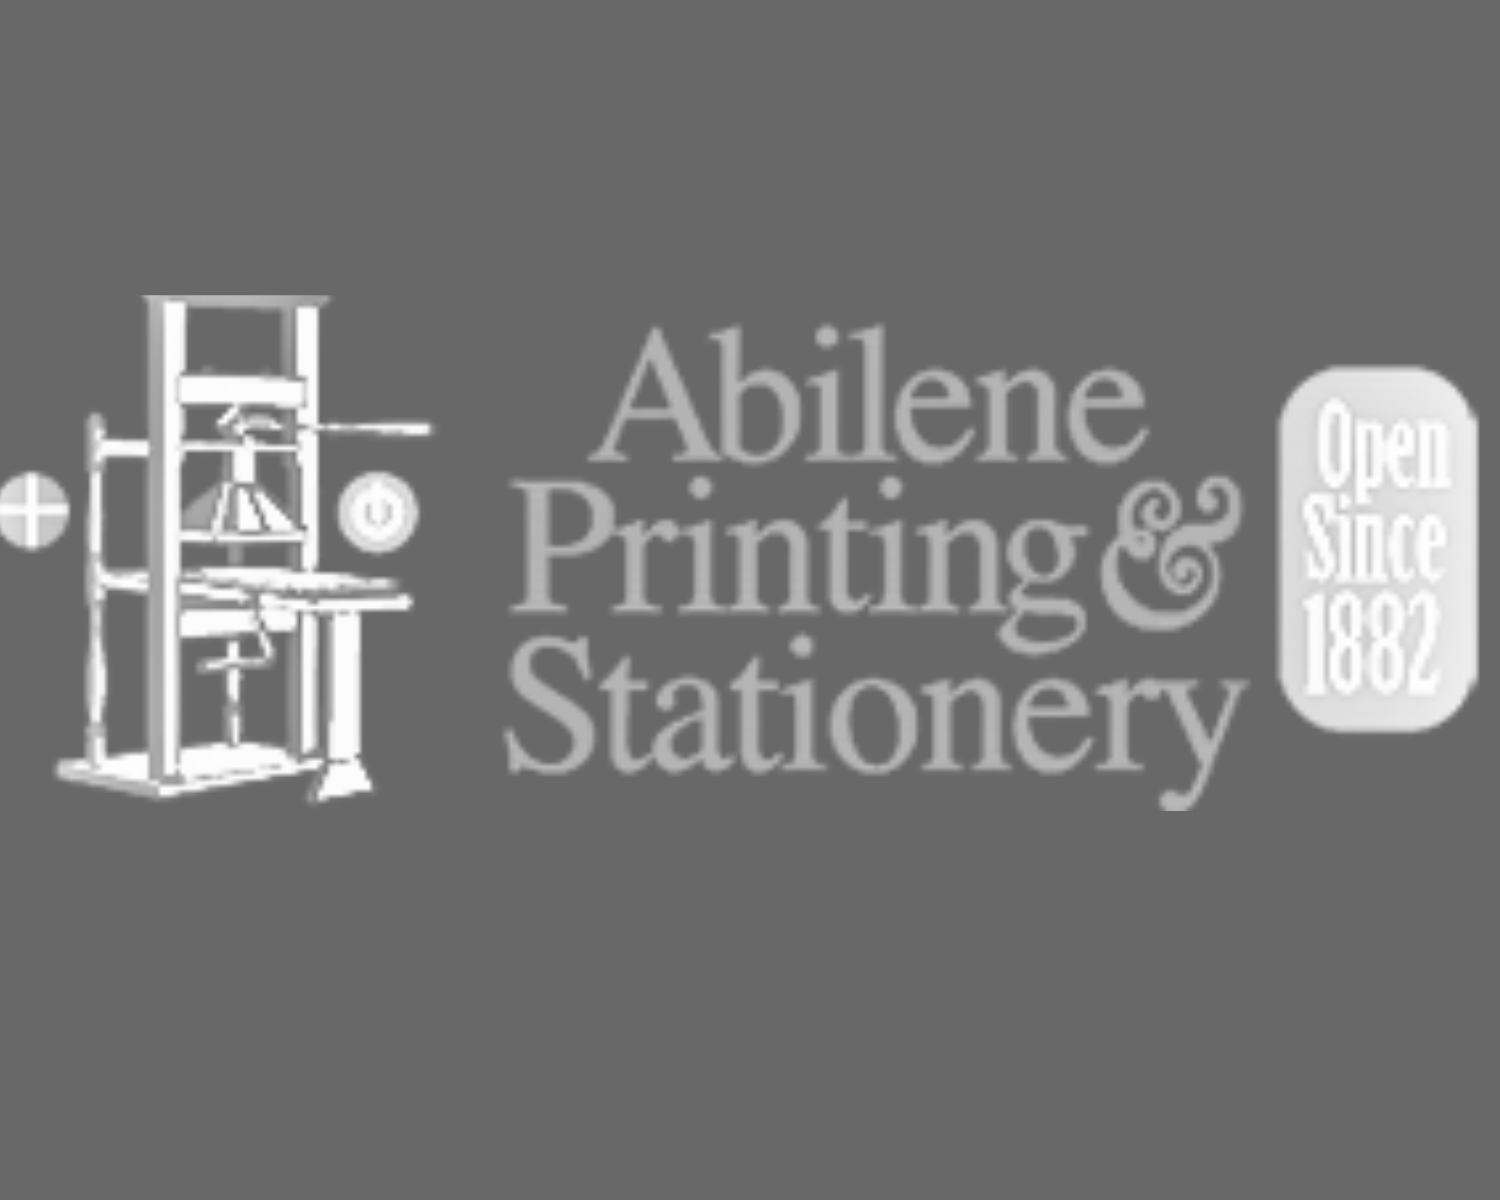 Abilene Printing & Stationary Co.